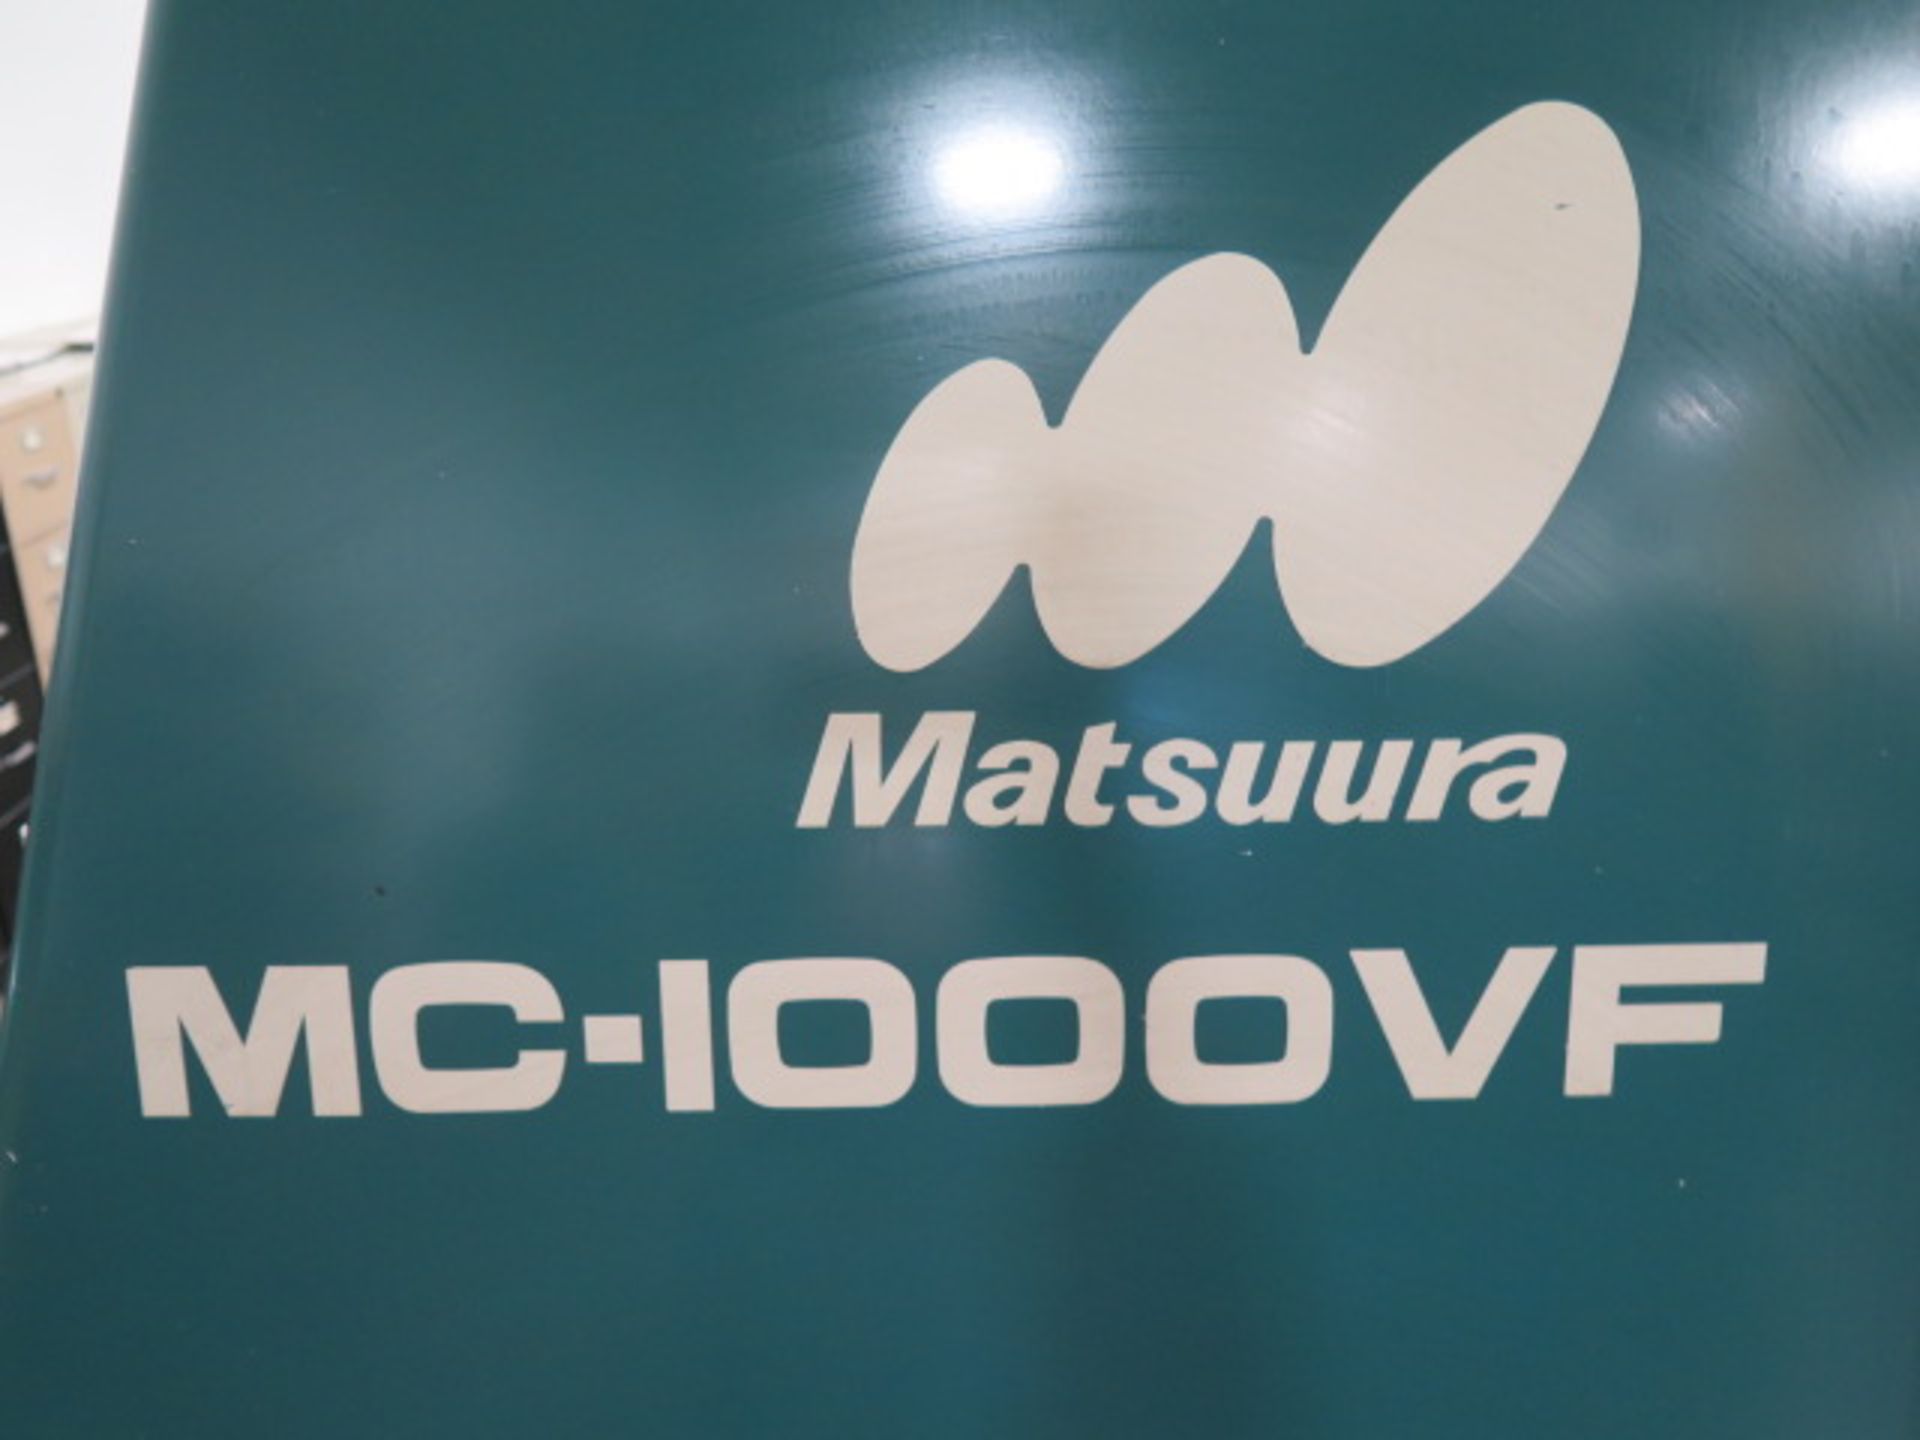 Matsuura MC-1000VF CNC Vertical Machining Center s/n 930310330 w/ Yasnac Controls, Hand Wheel, 30-S - Image 5 of 18